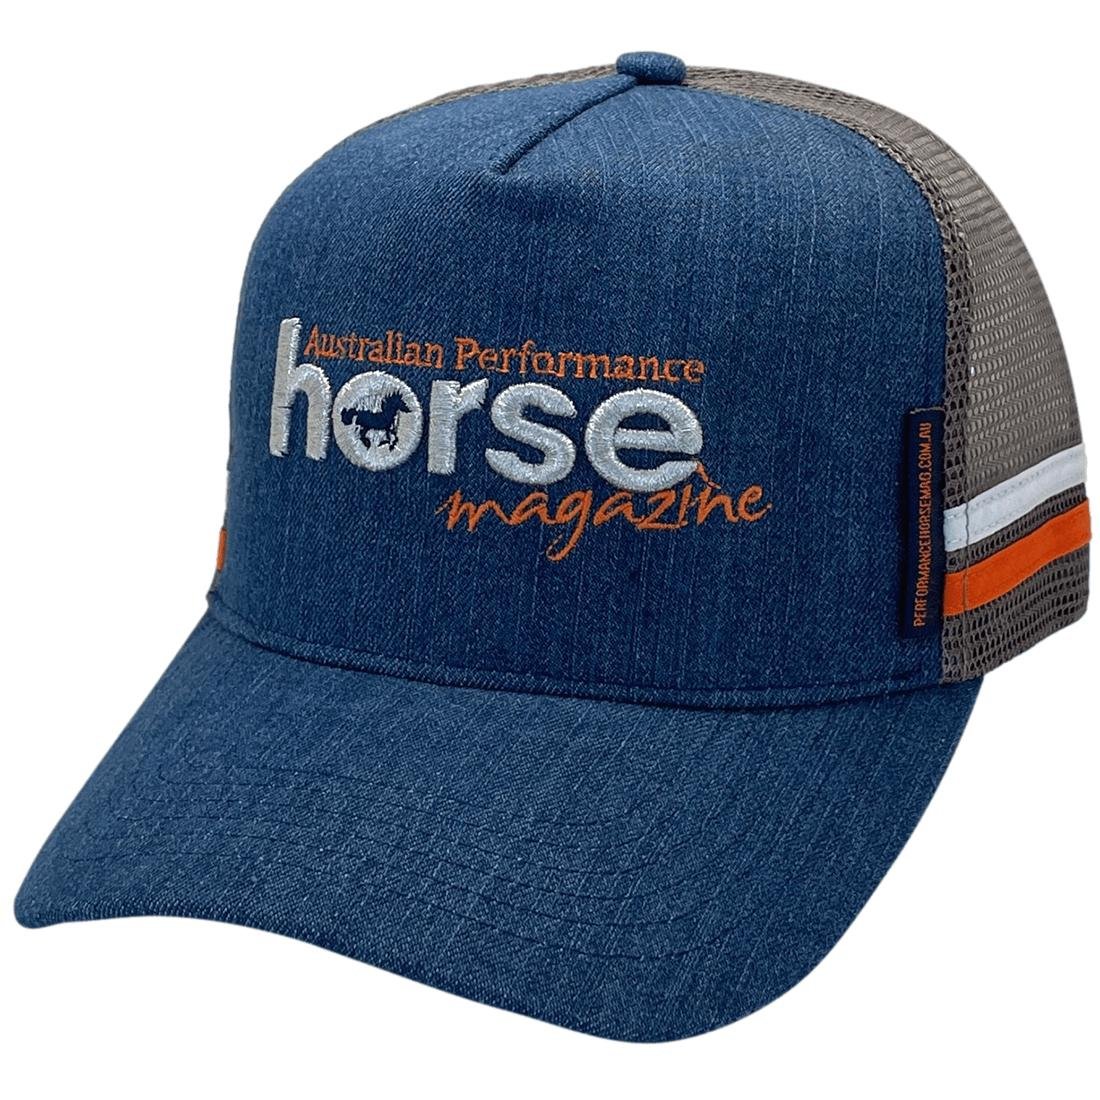 Australian Performance Horse Magazine Custom Midrange Trucker Hat